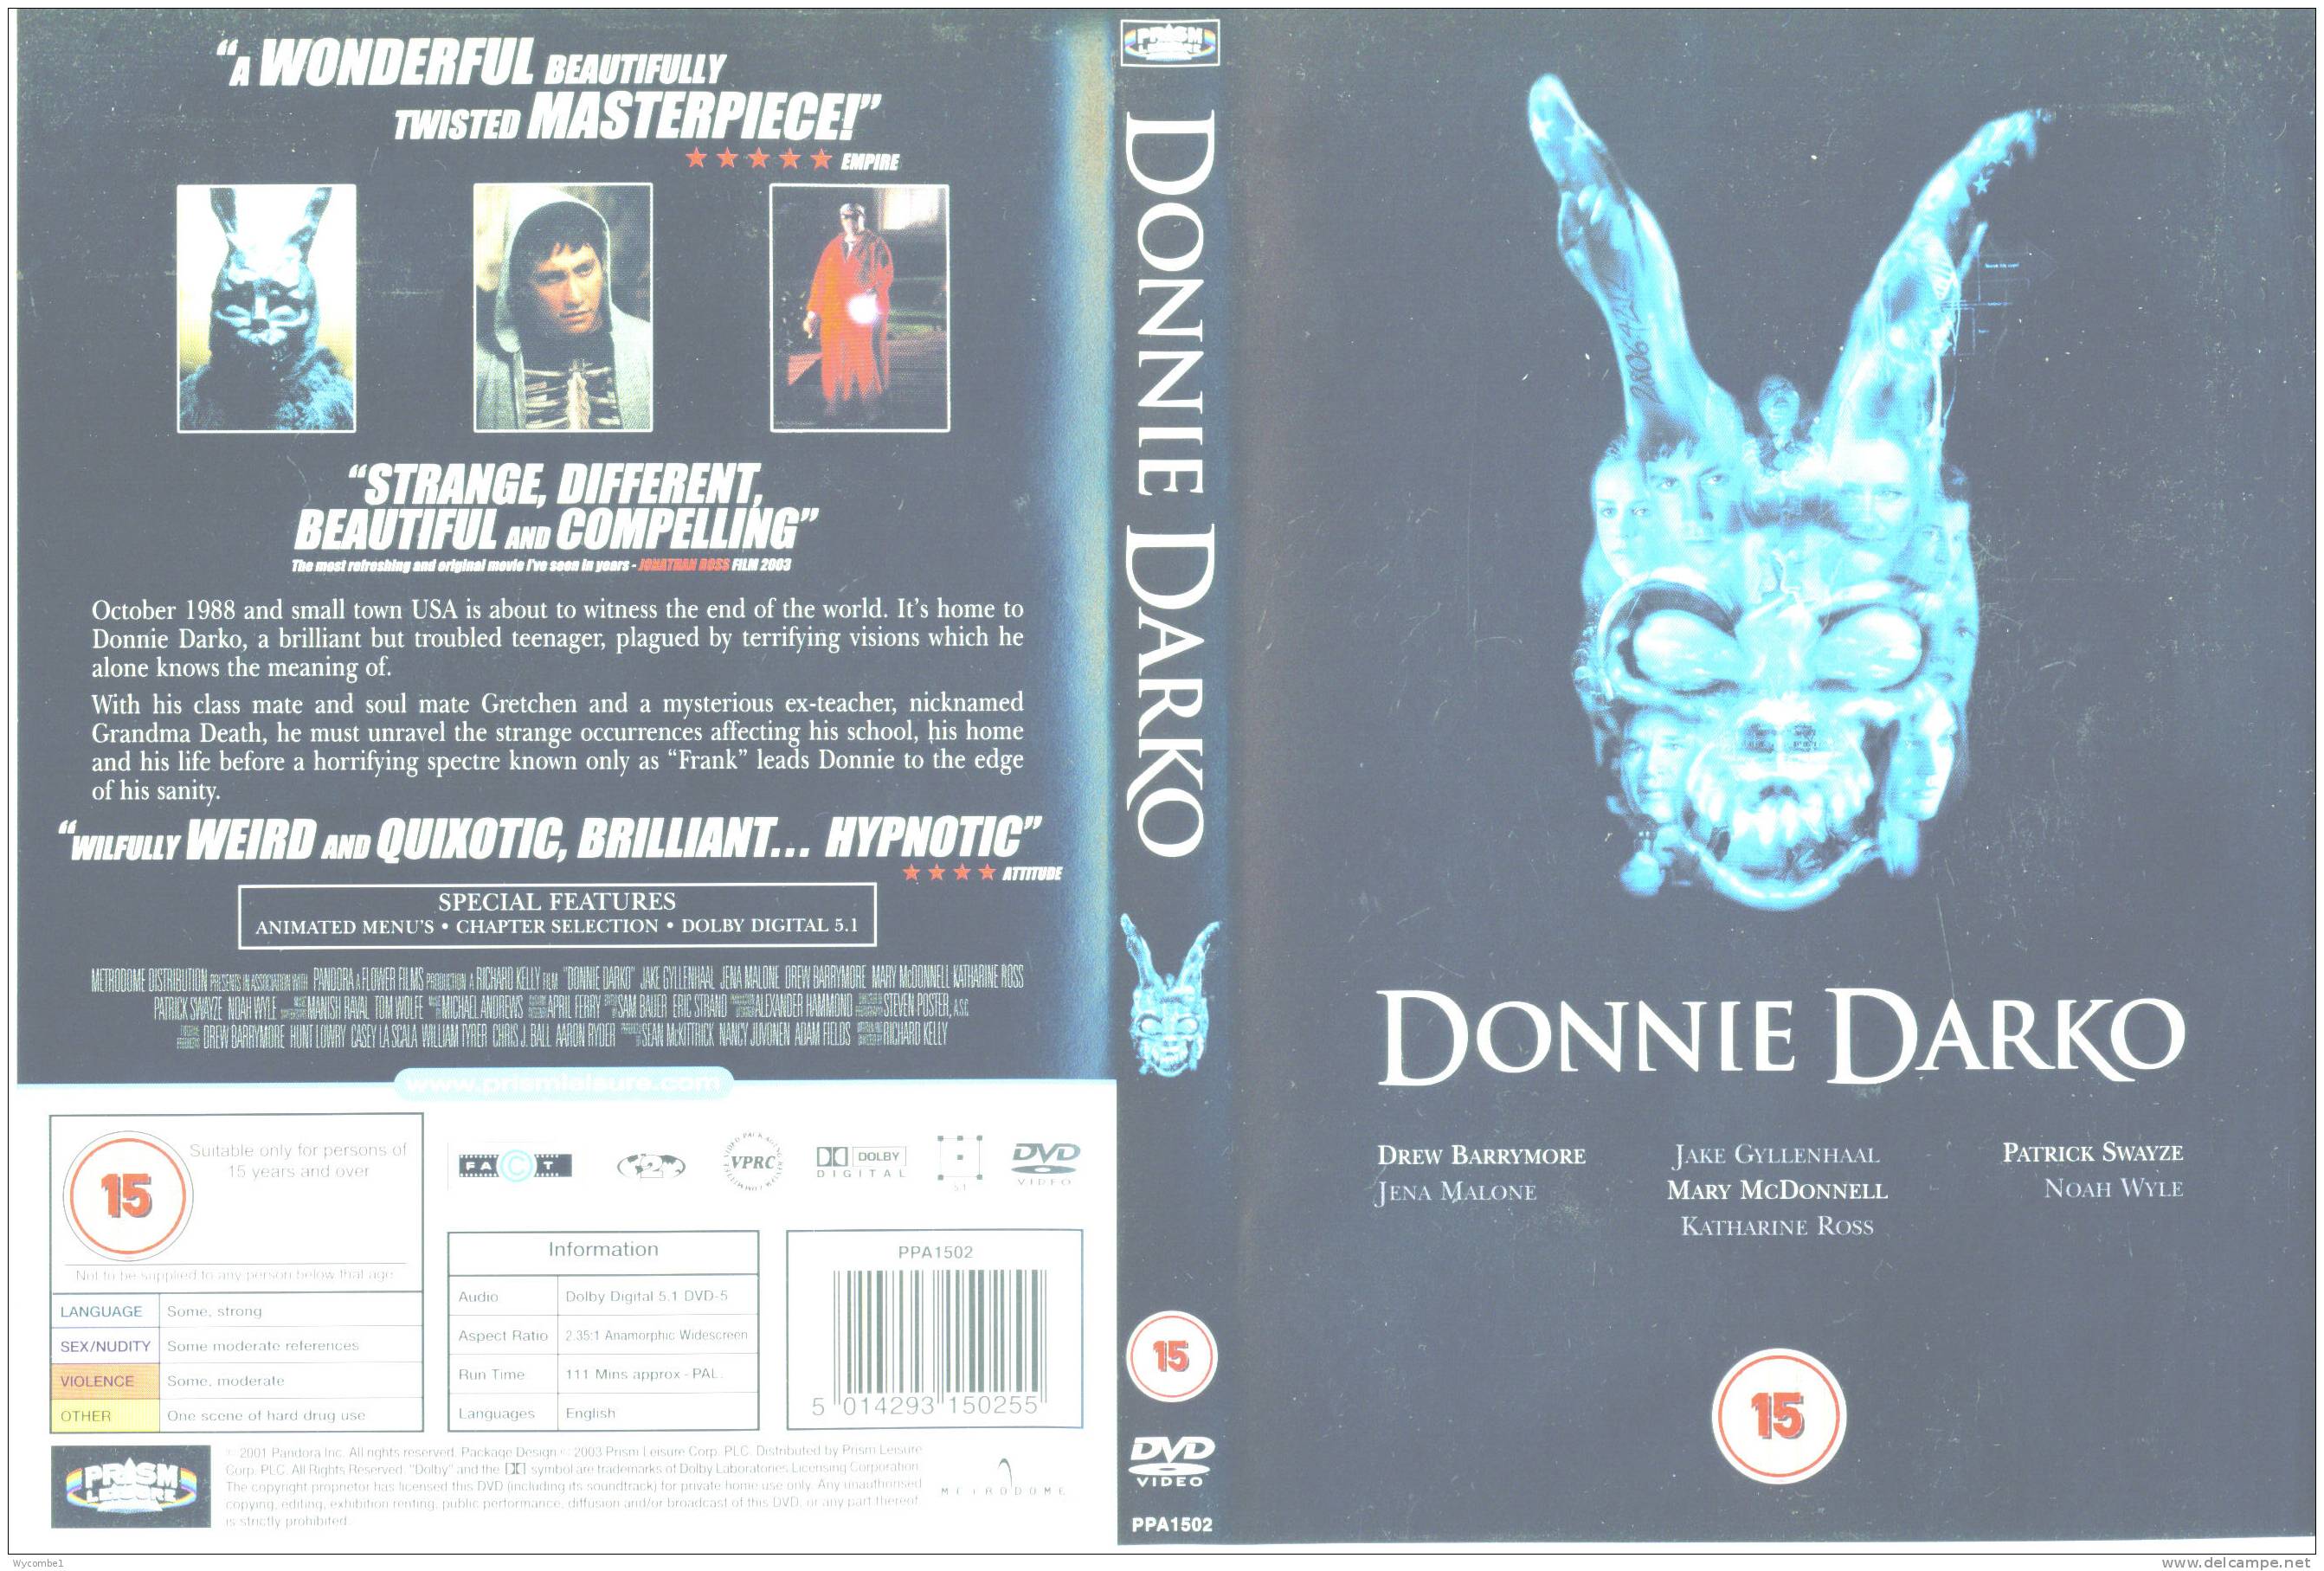 DONNIE DARKO - Patrick Swayze (Details In Scan) - Drama